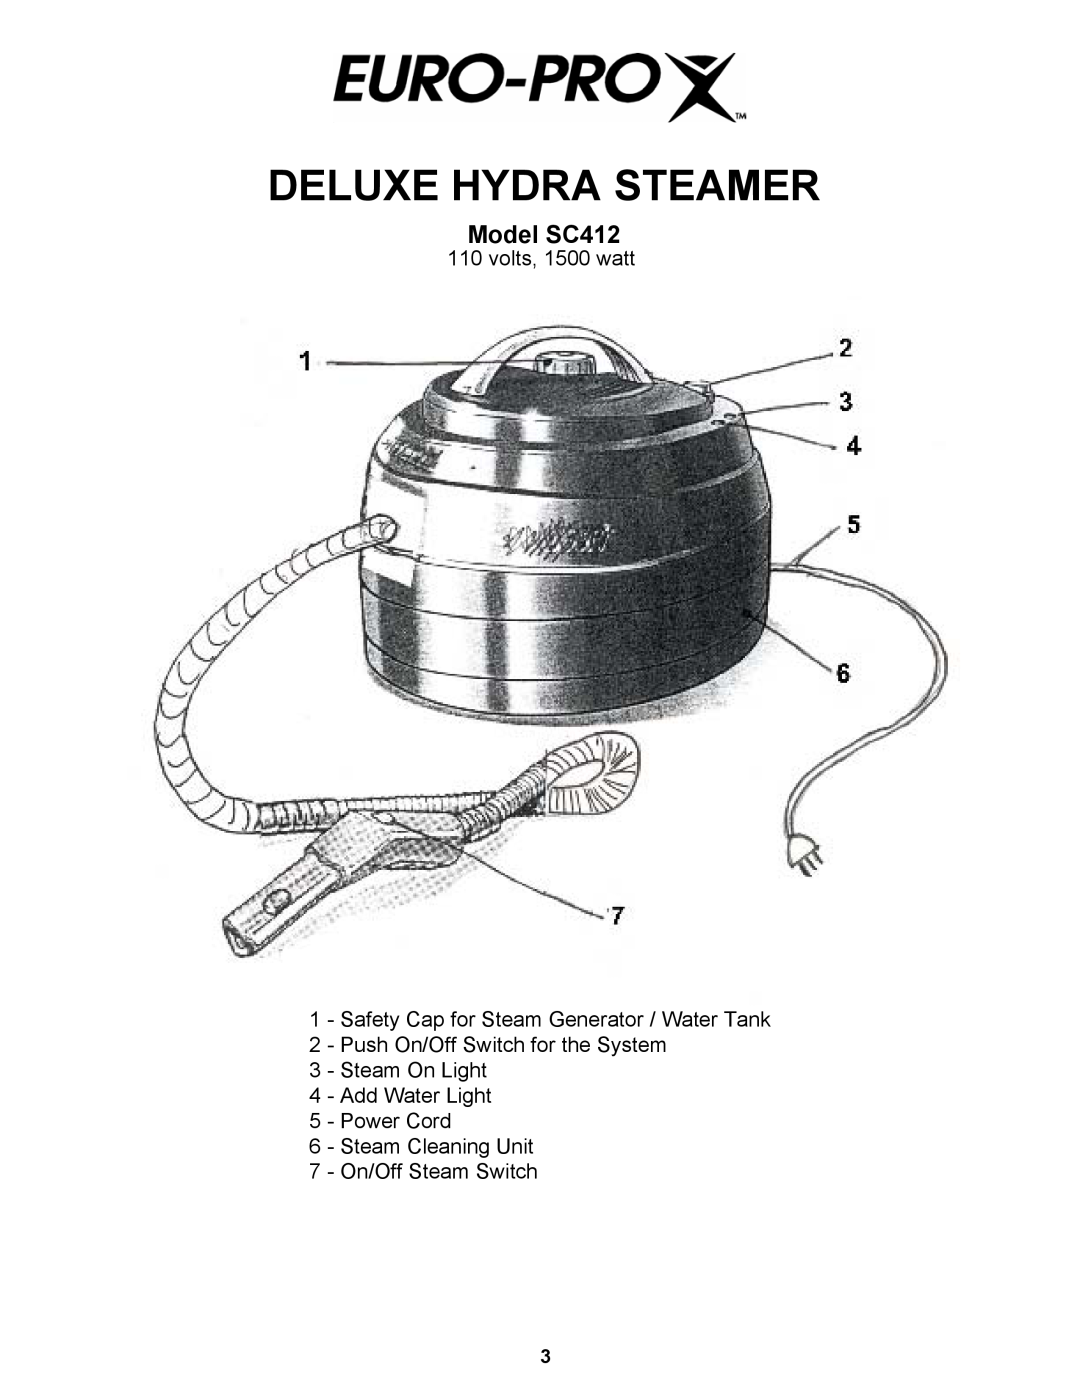 Euro-Pro Deluxe Hydra Steamer, Model SC412, volts, 1500 watt, Steam On Light 4 - Add Water Light, On/Off Steam Switch 